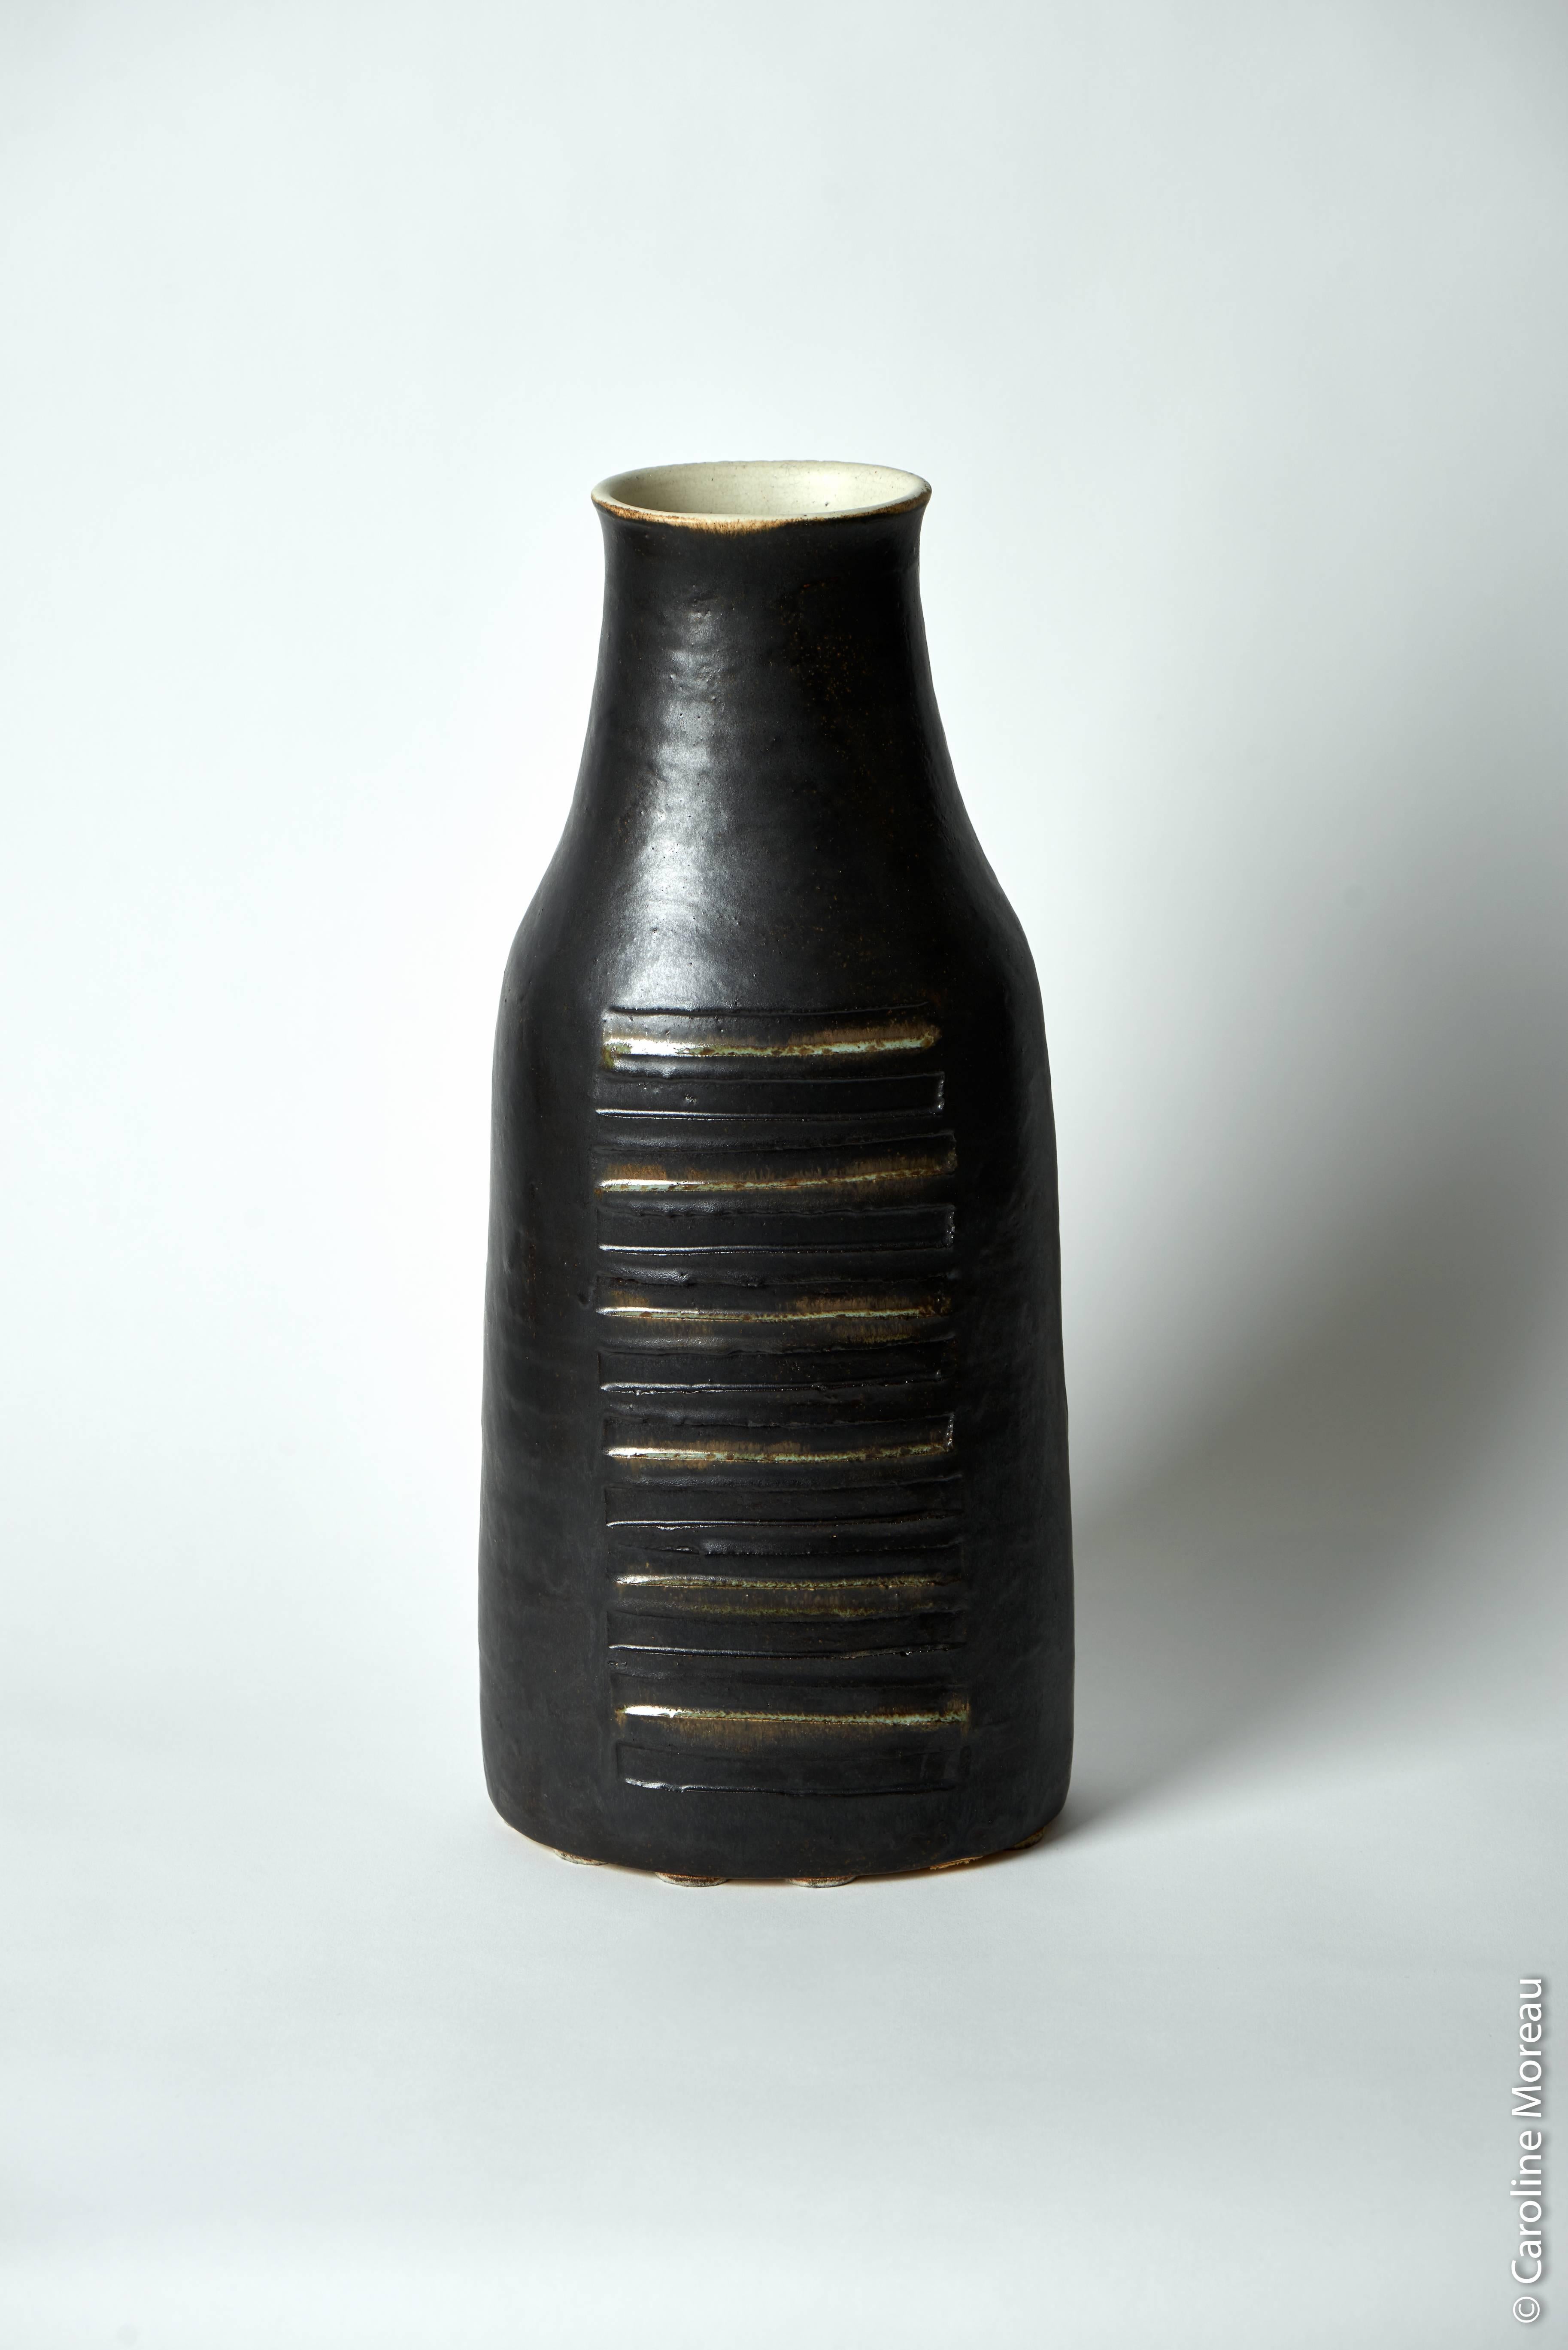 Large "africanist" style ceramic vase by Bruno Gambone, 1970s
Signed Gambone Italy.